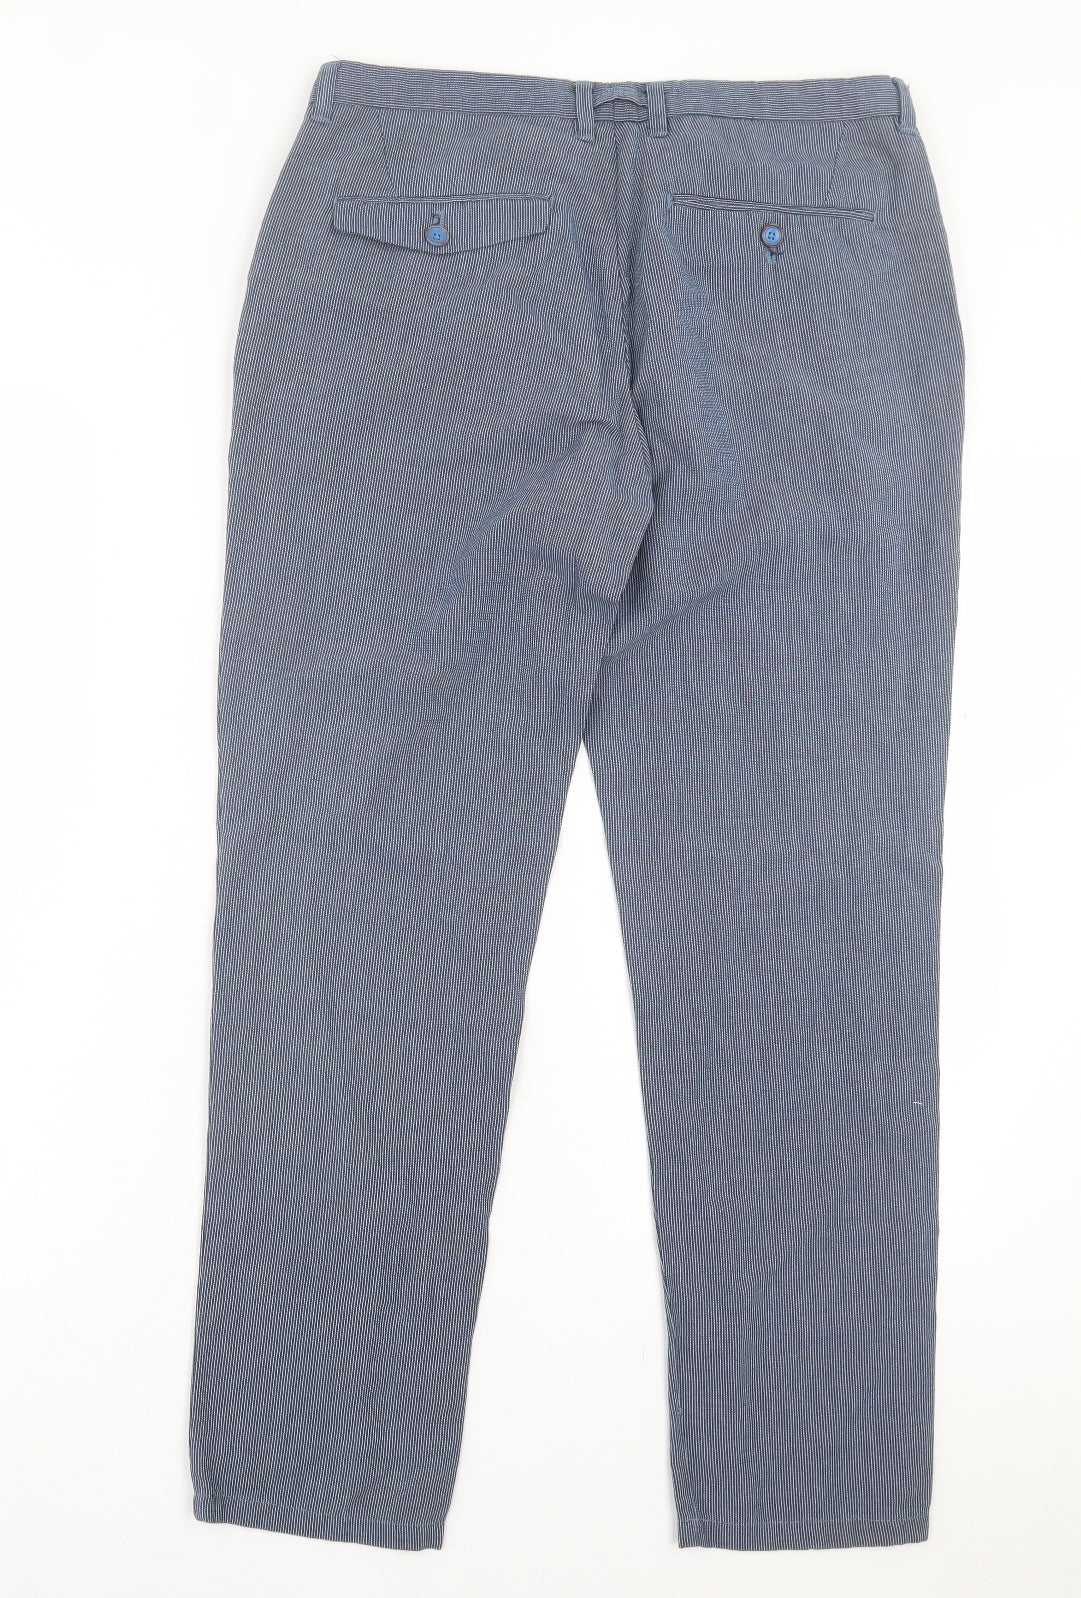 Revolution Mens Blue Striped Cotton Trousers Size 30 in L29 in Regular Button